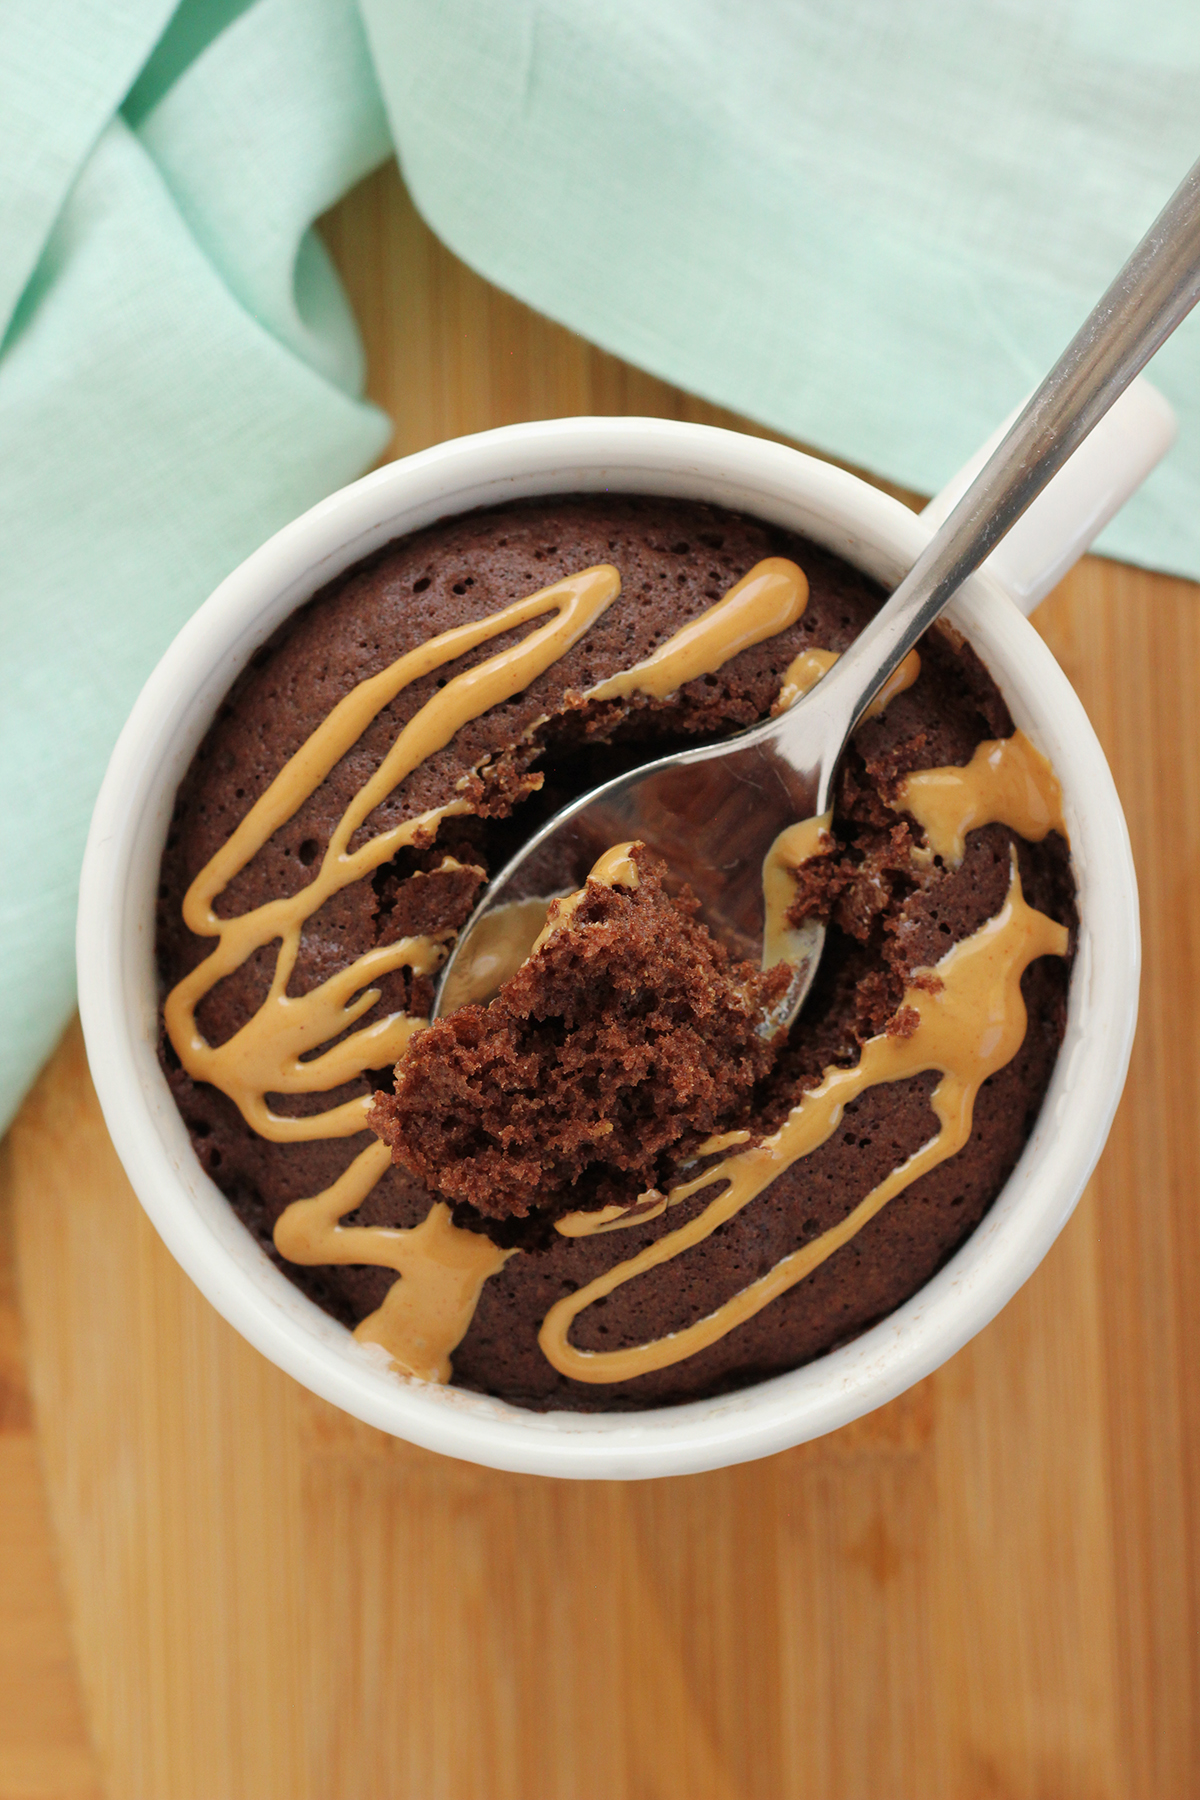 Nutella Chocolate Mug Cake For One - Sweetest Menu